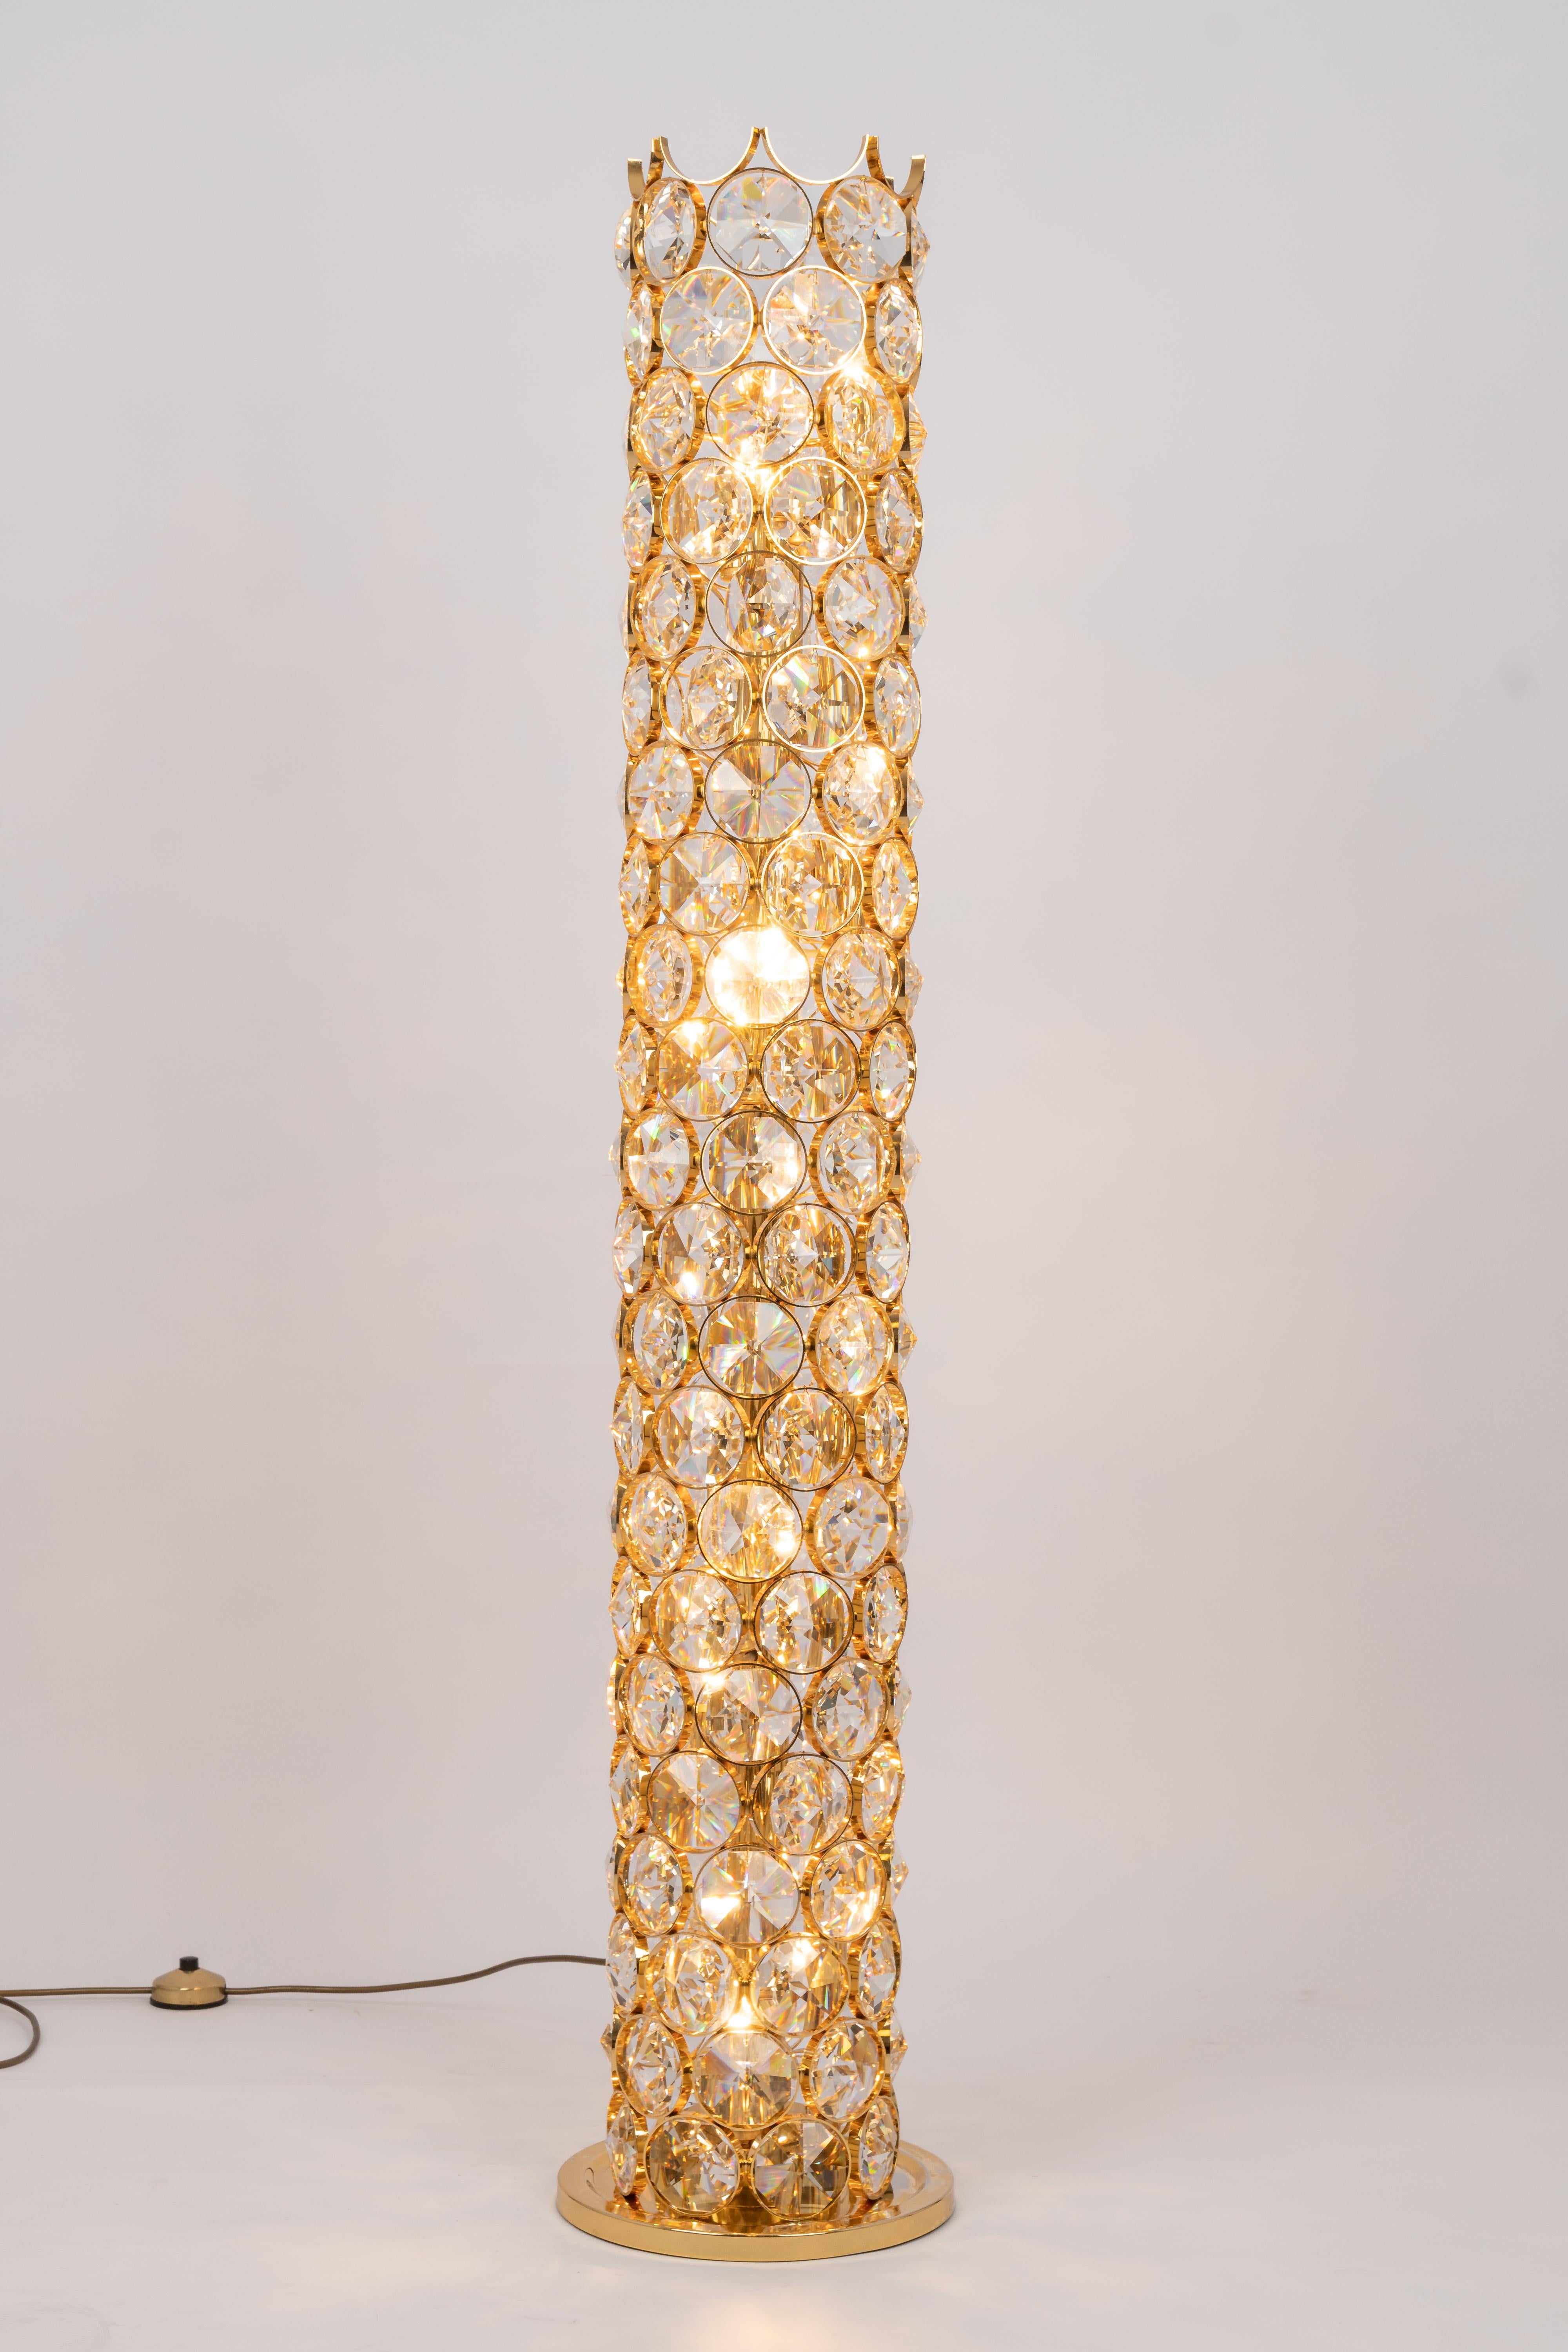 Exquisite Gilt Jewel Floor Lamp Sciolari Design by Palwa, Germany, 1960s For Sale 1